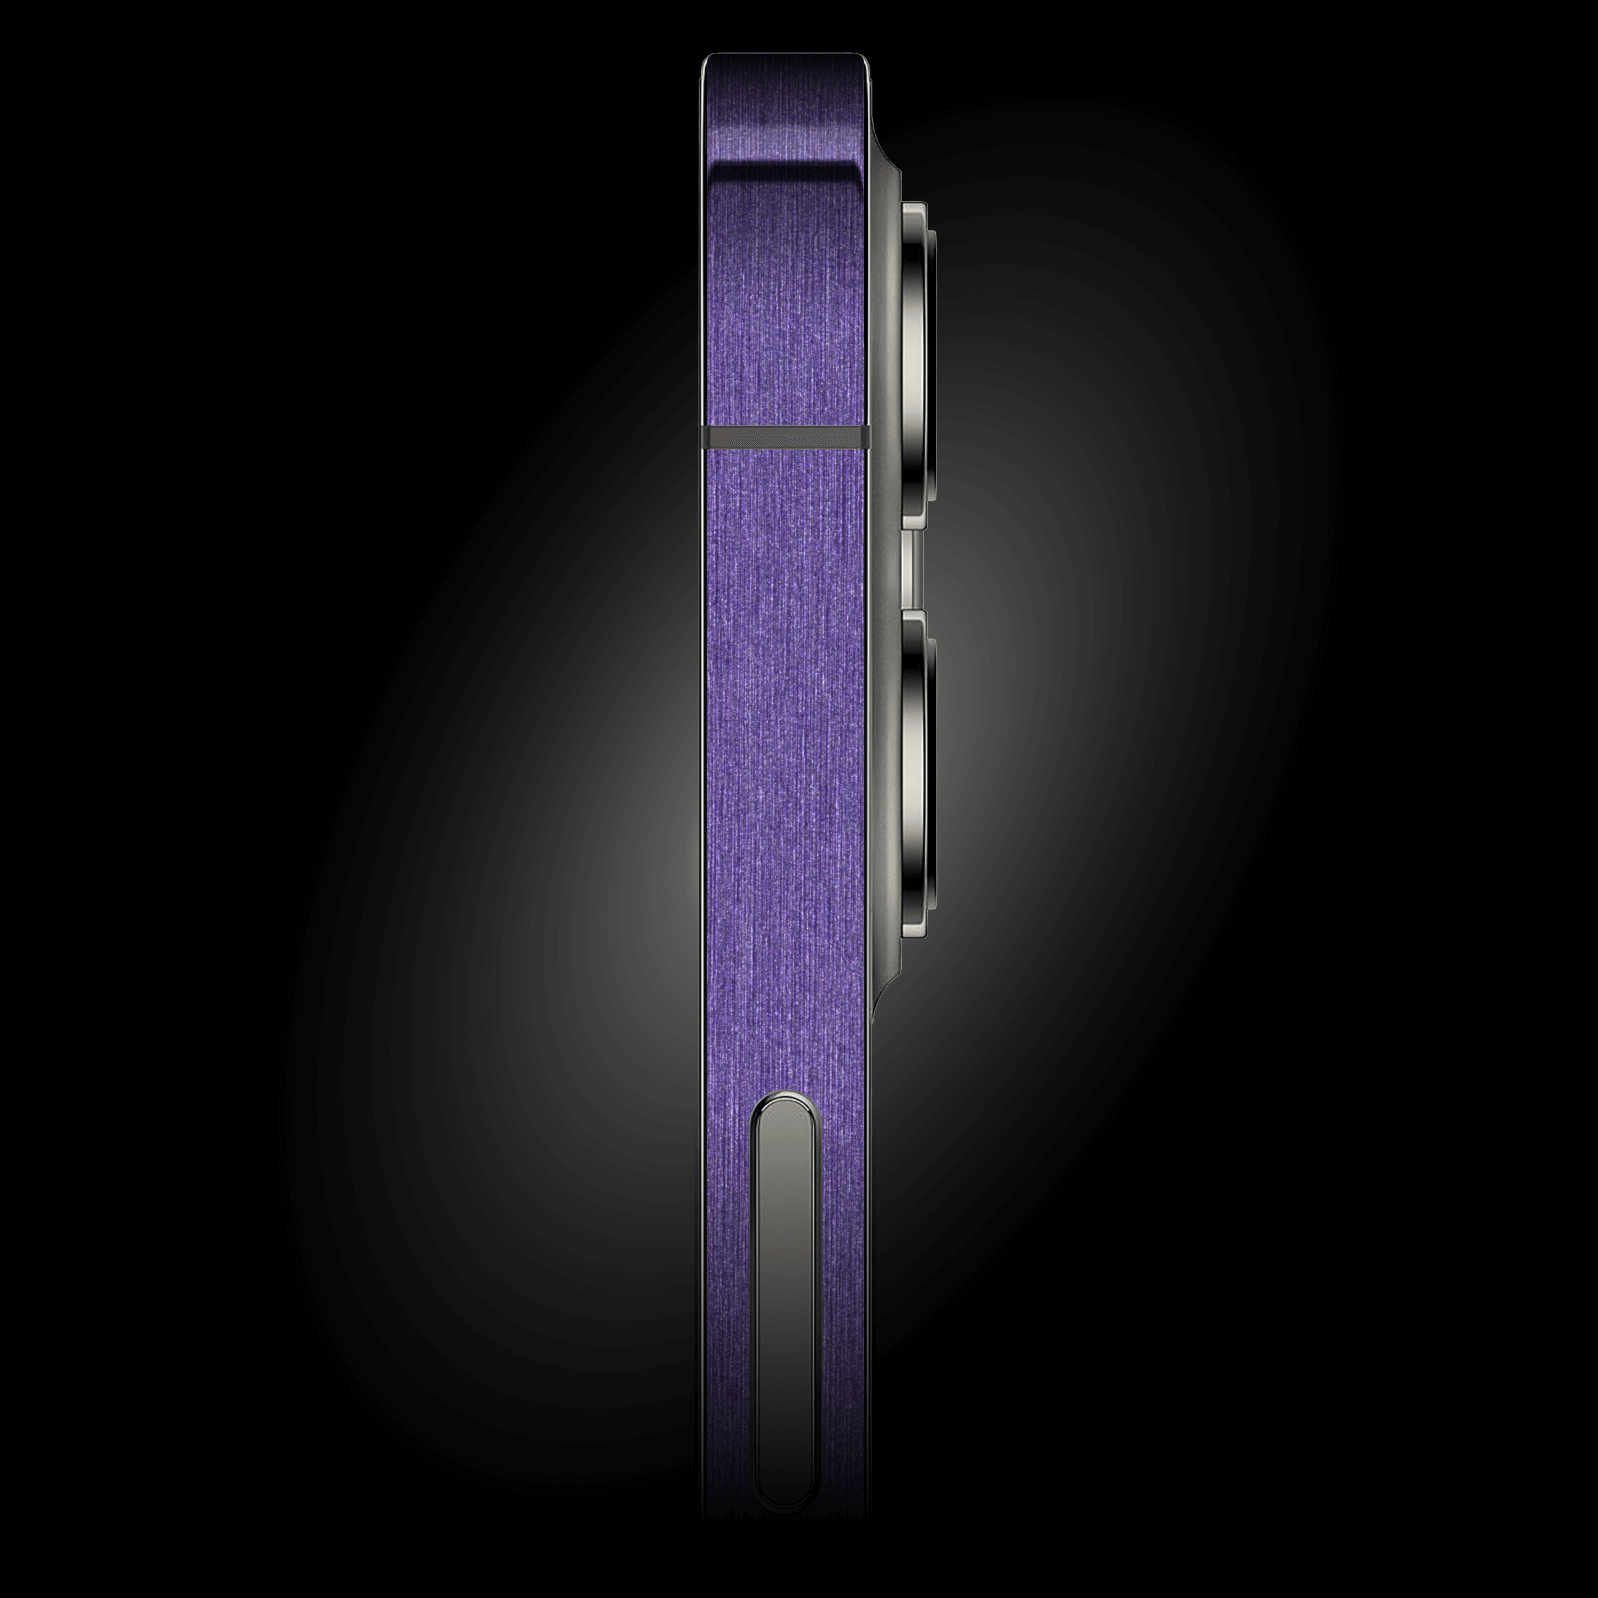 Iphone 12 Pro Max Brushed Purple Skin Wrap Easyskinz